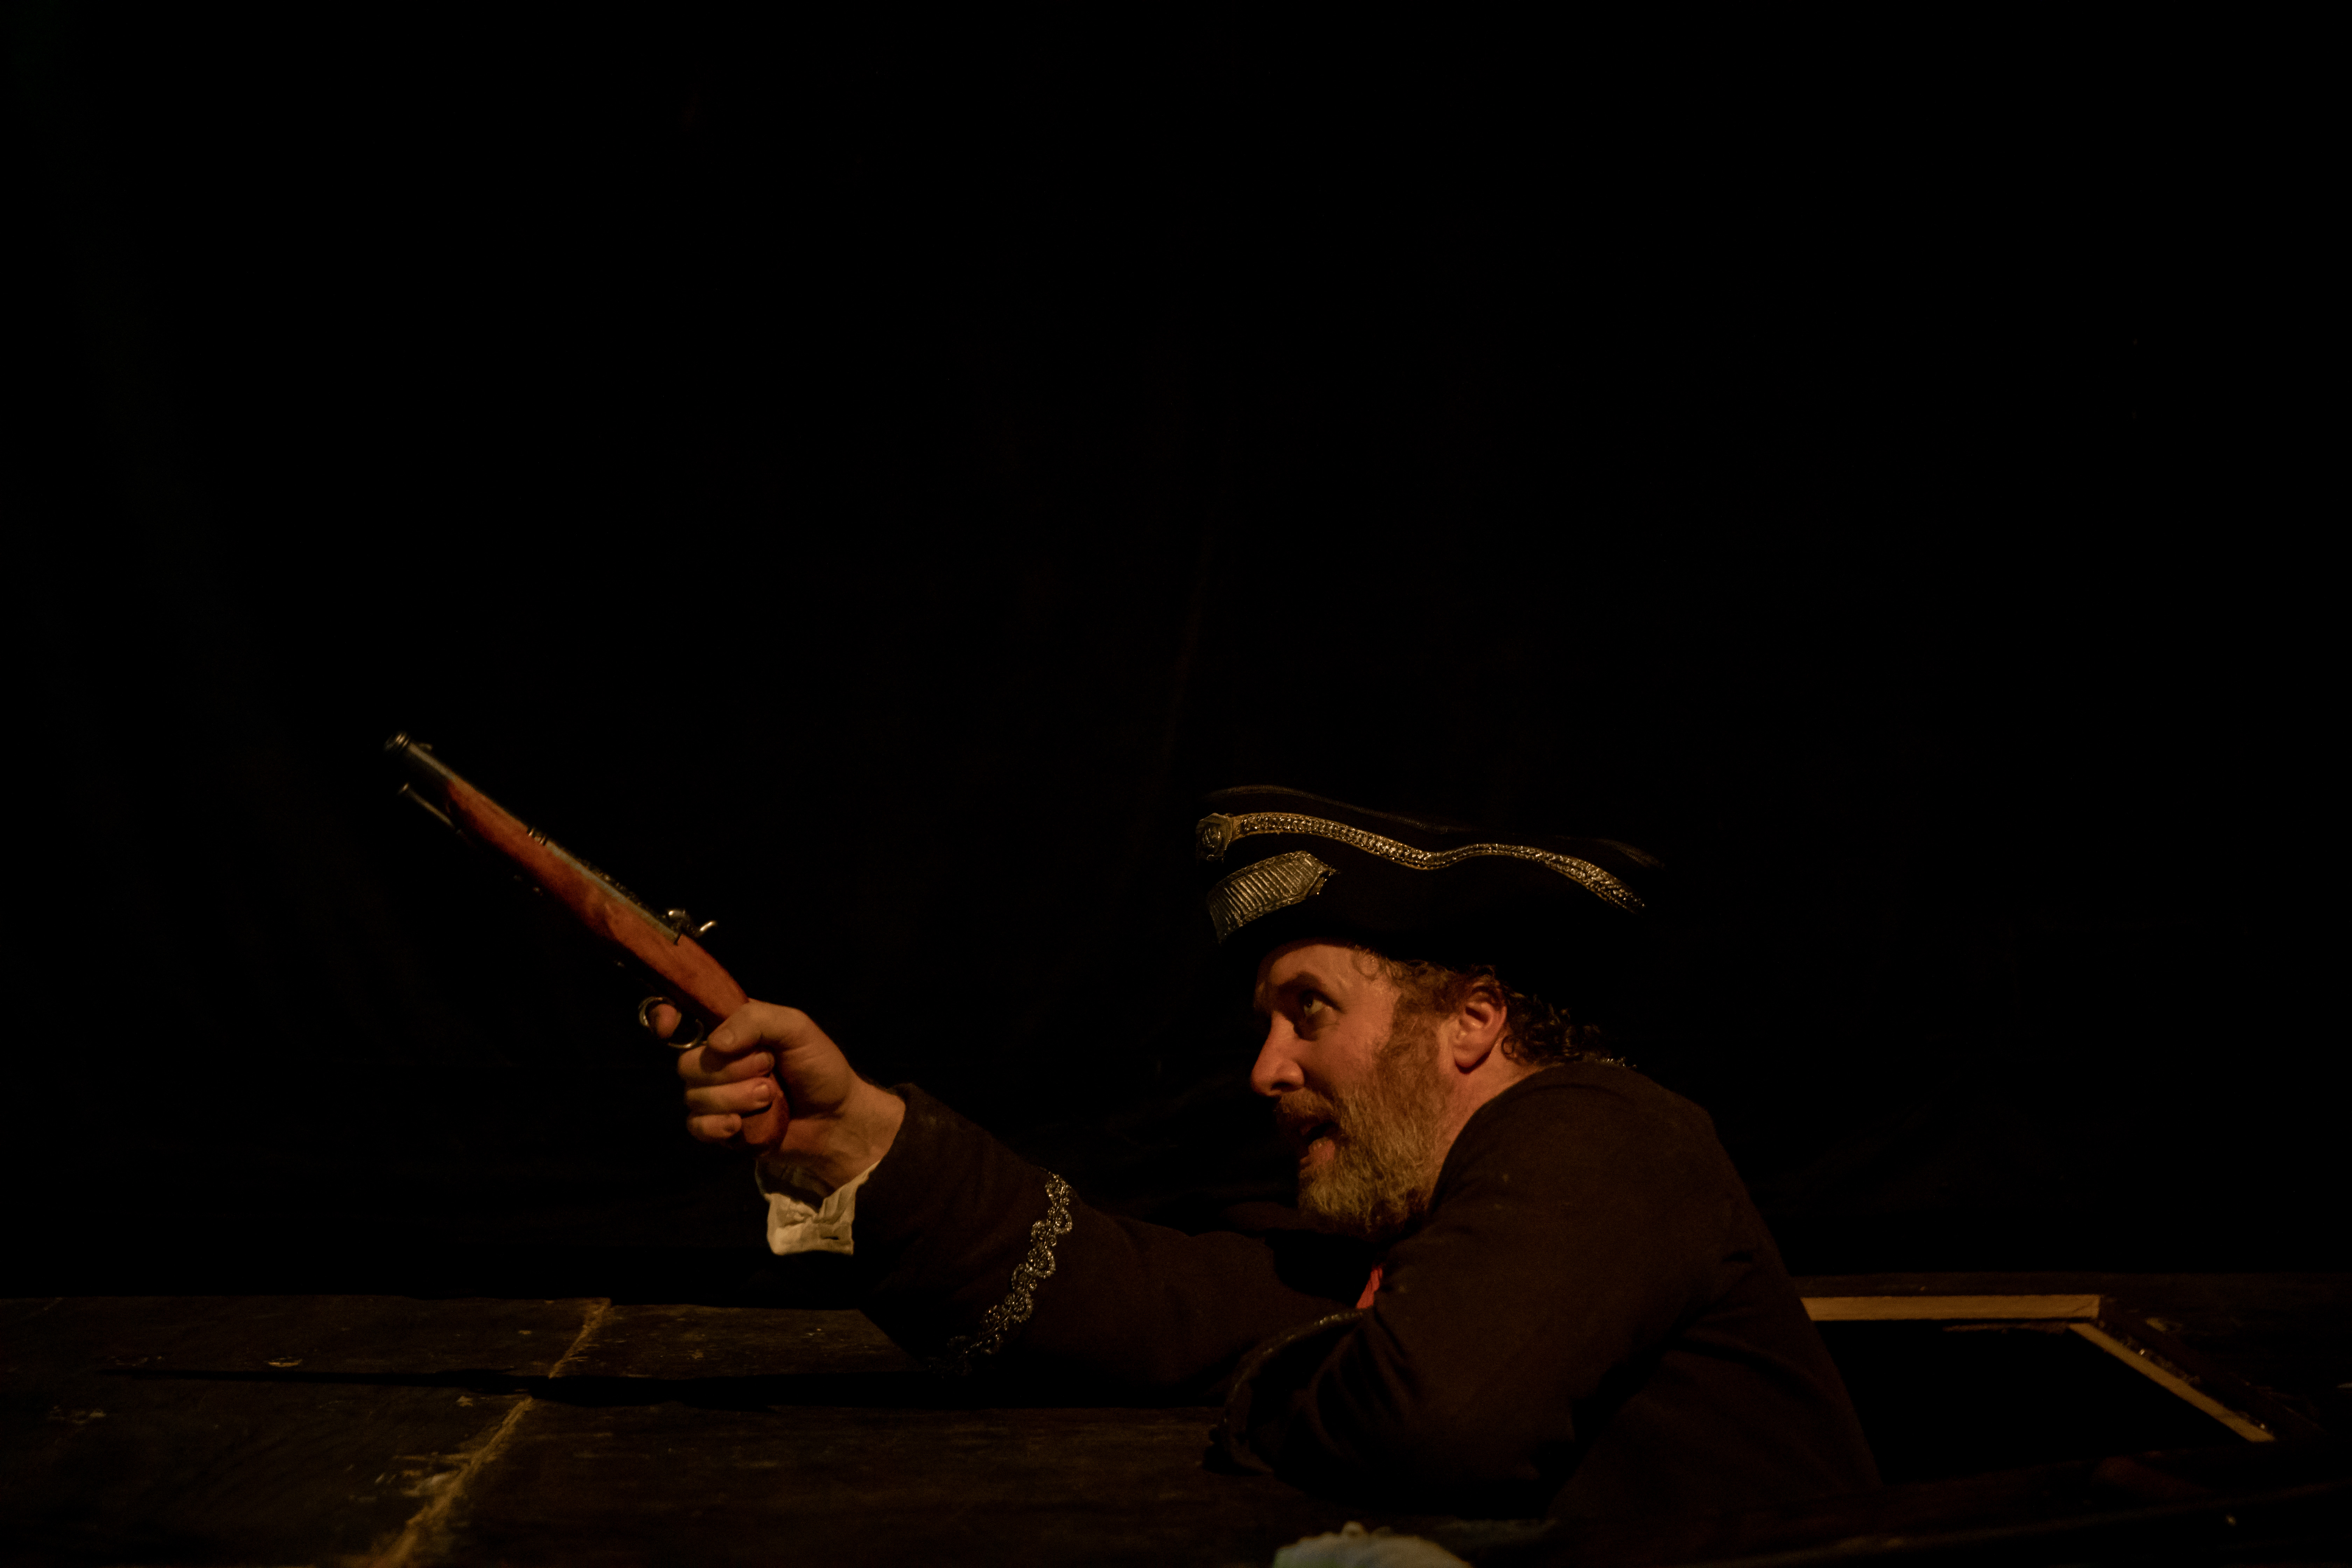 Long John Silver played by Benjamin Dyson